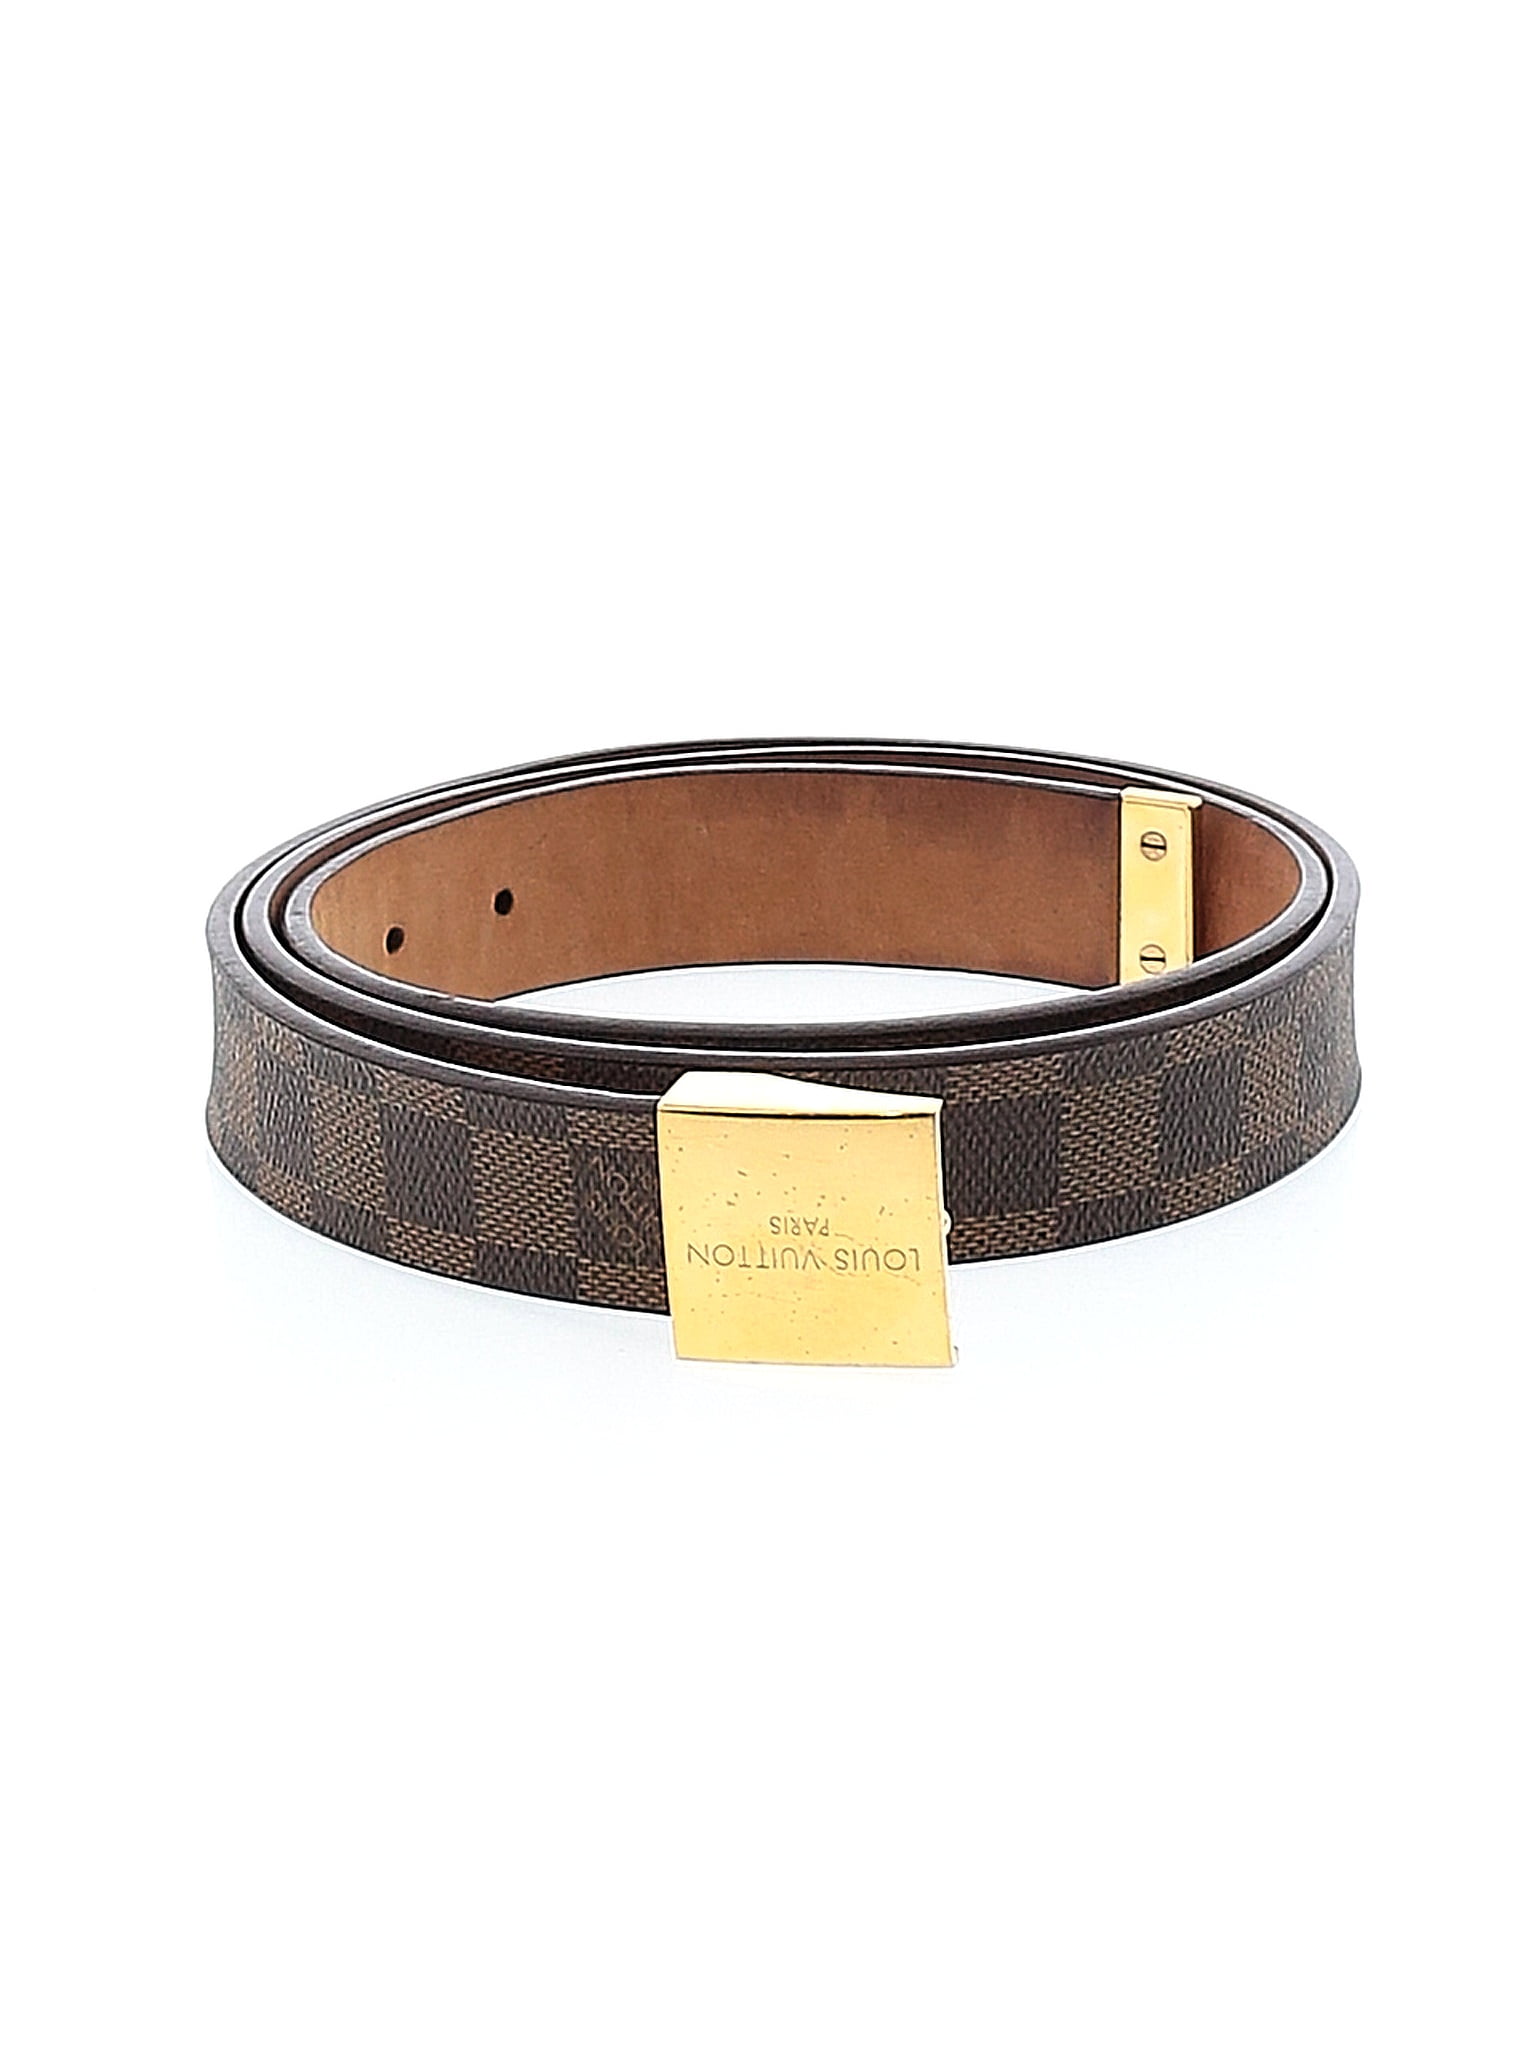 Louis Vuitton 100% Coated Canvas Brown Buckle Belt Size 44 - 51% off